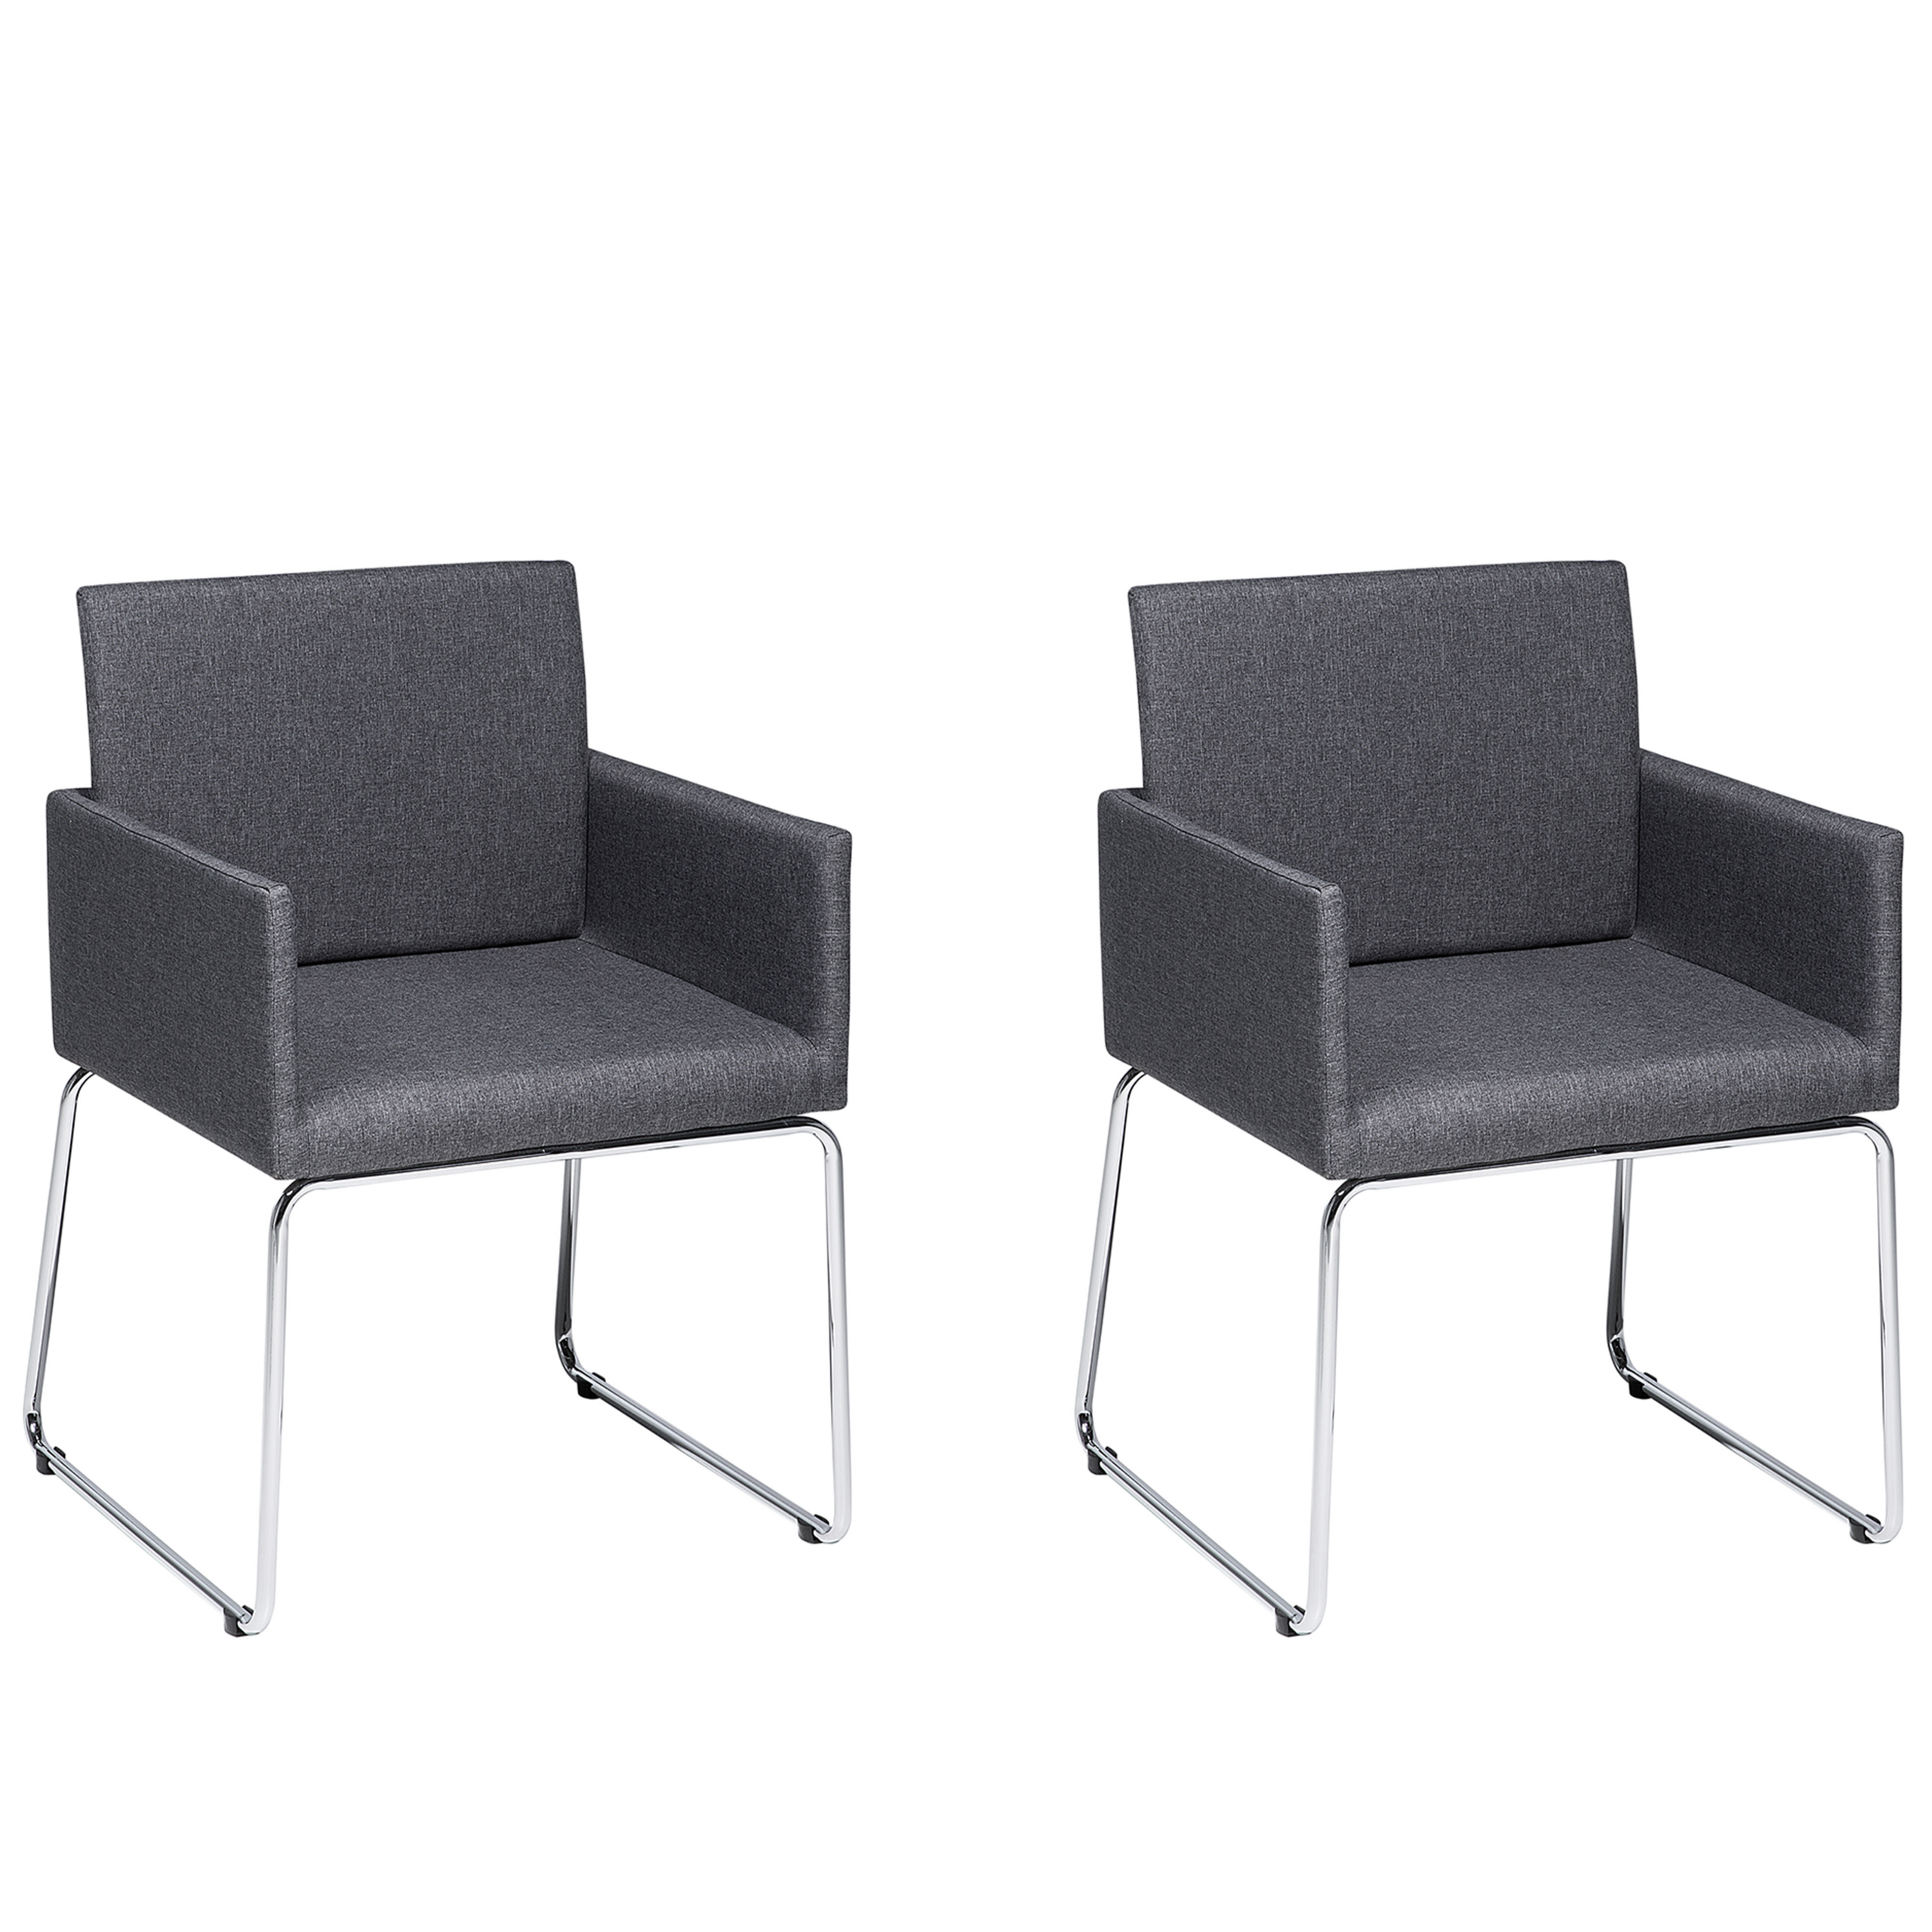 Beliani Set of 2 Dining Chairs Dark Grey Fabric Chromed Metal Legs Modern